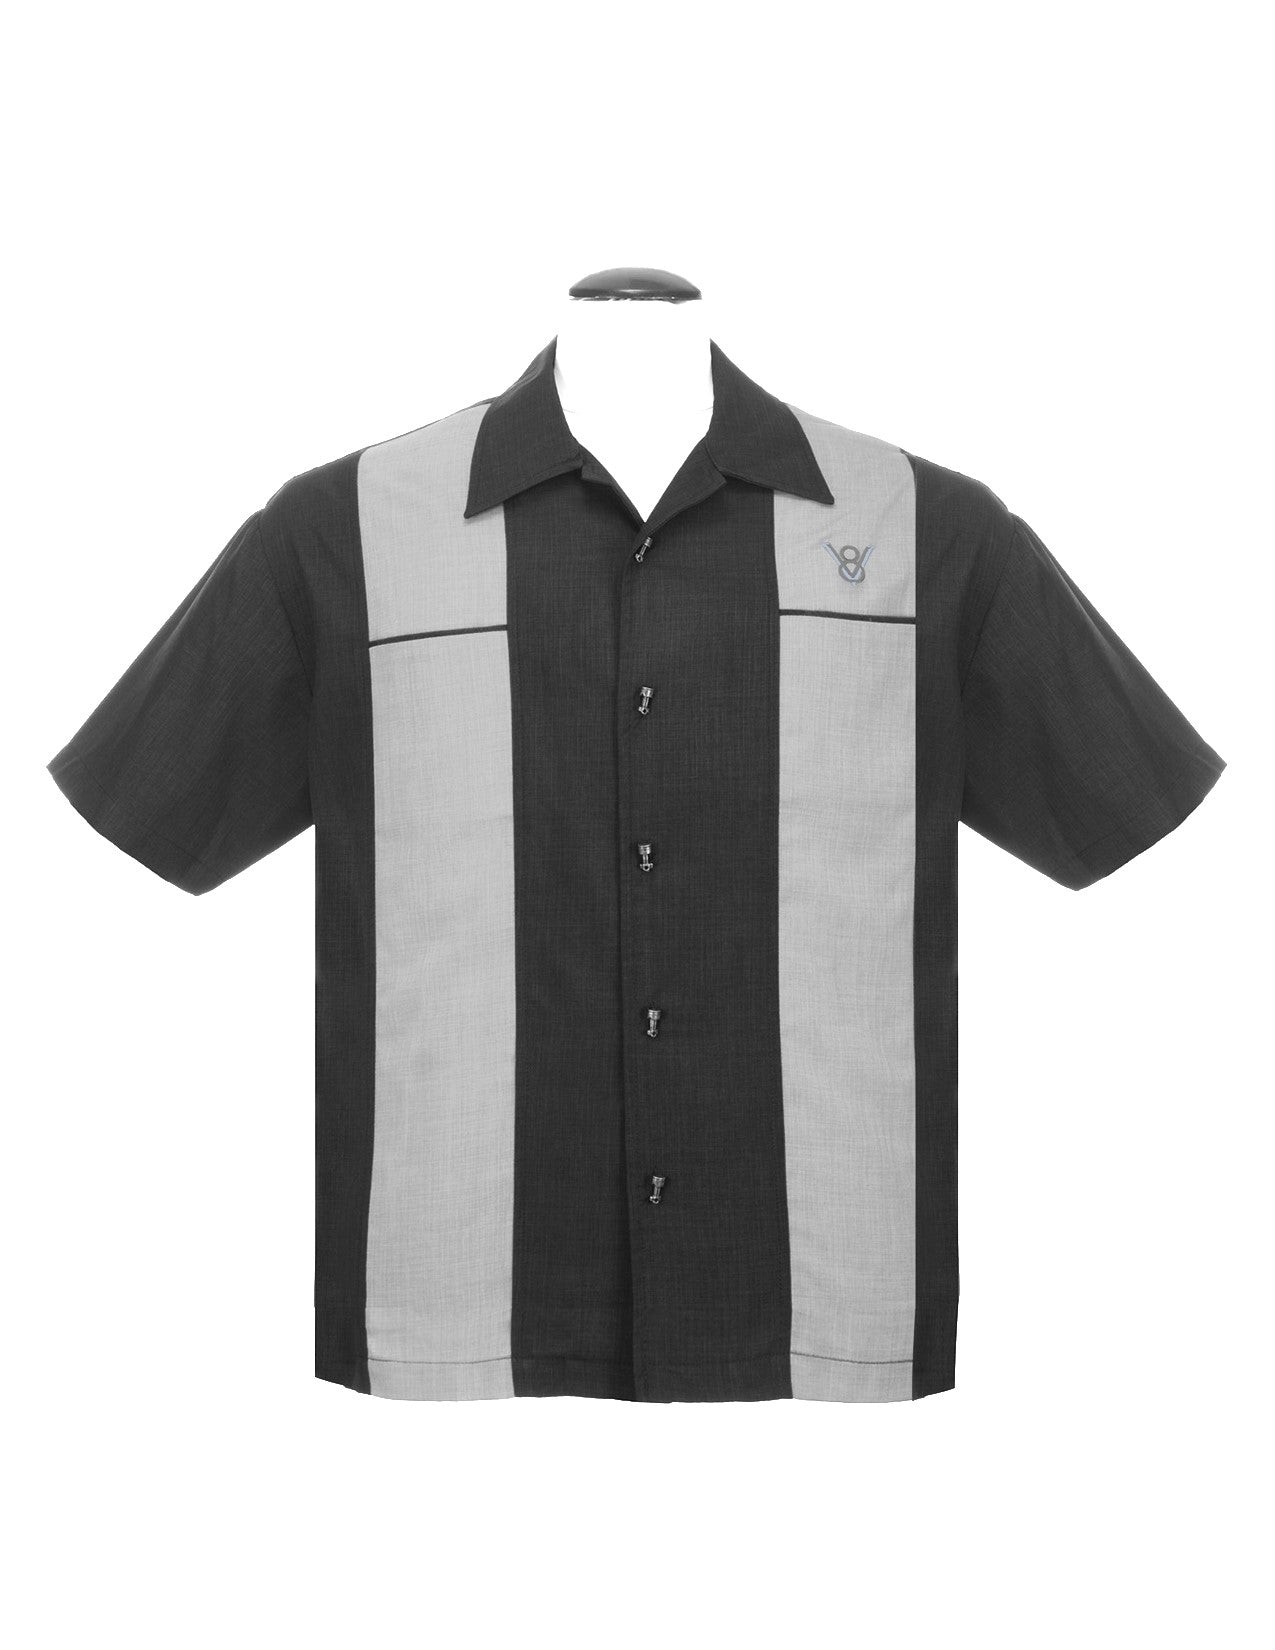 Classy Piston Black/Silver Bowling Shirt by Steady Clothing